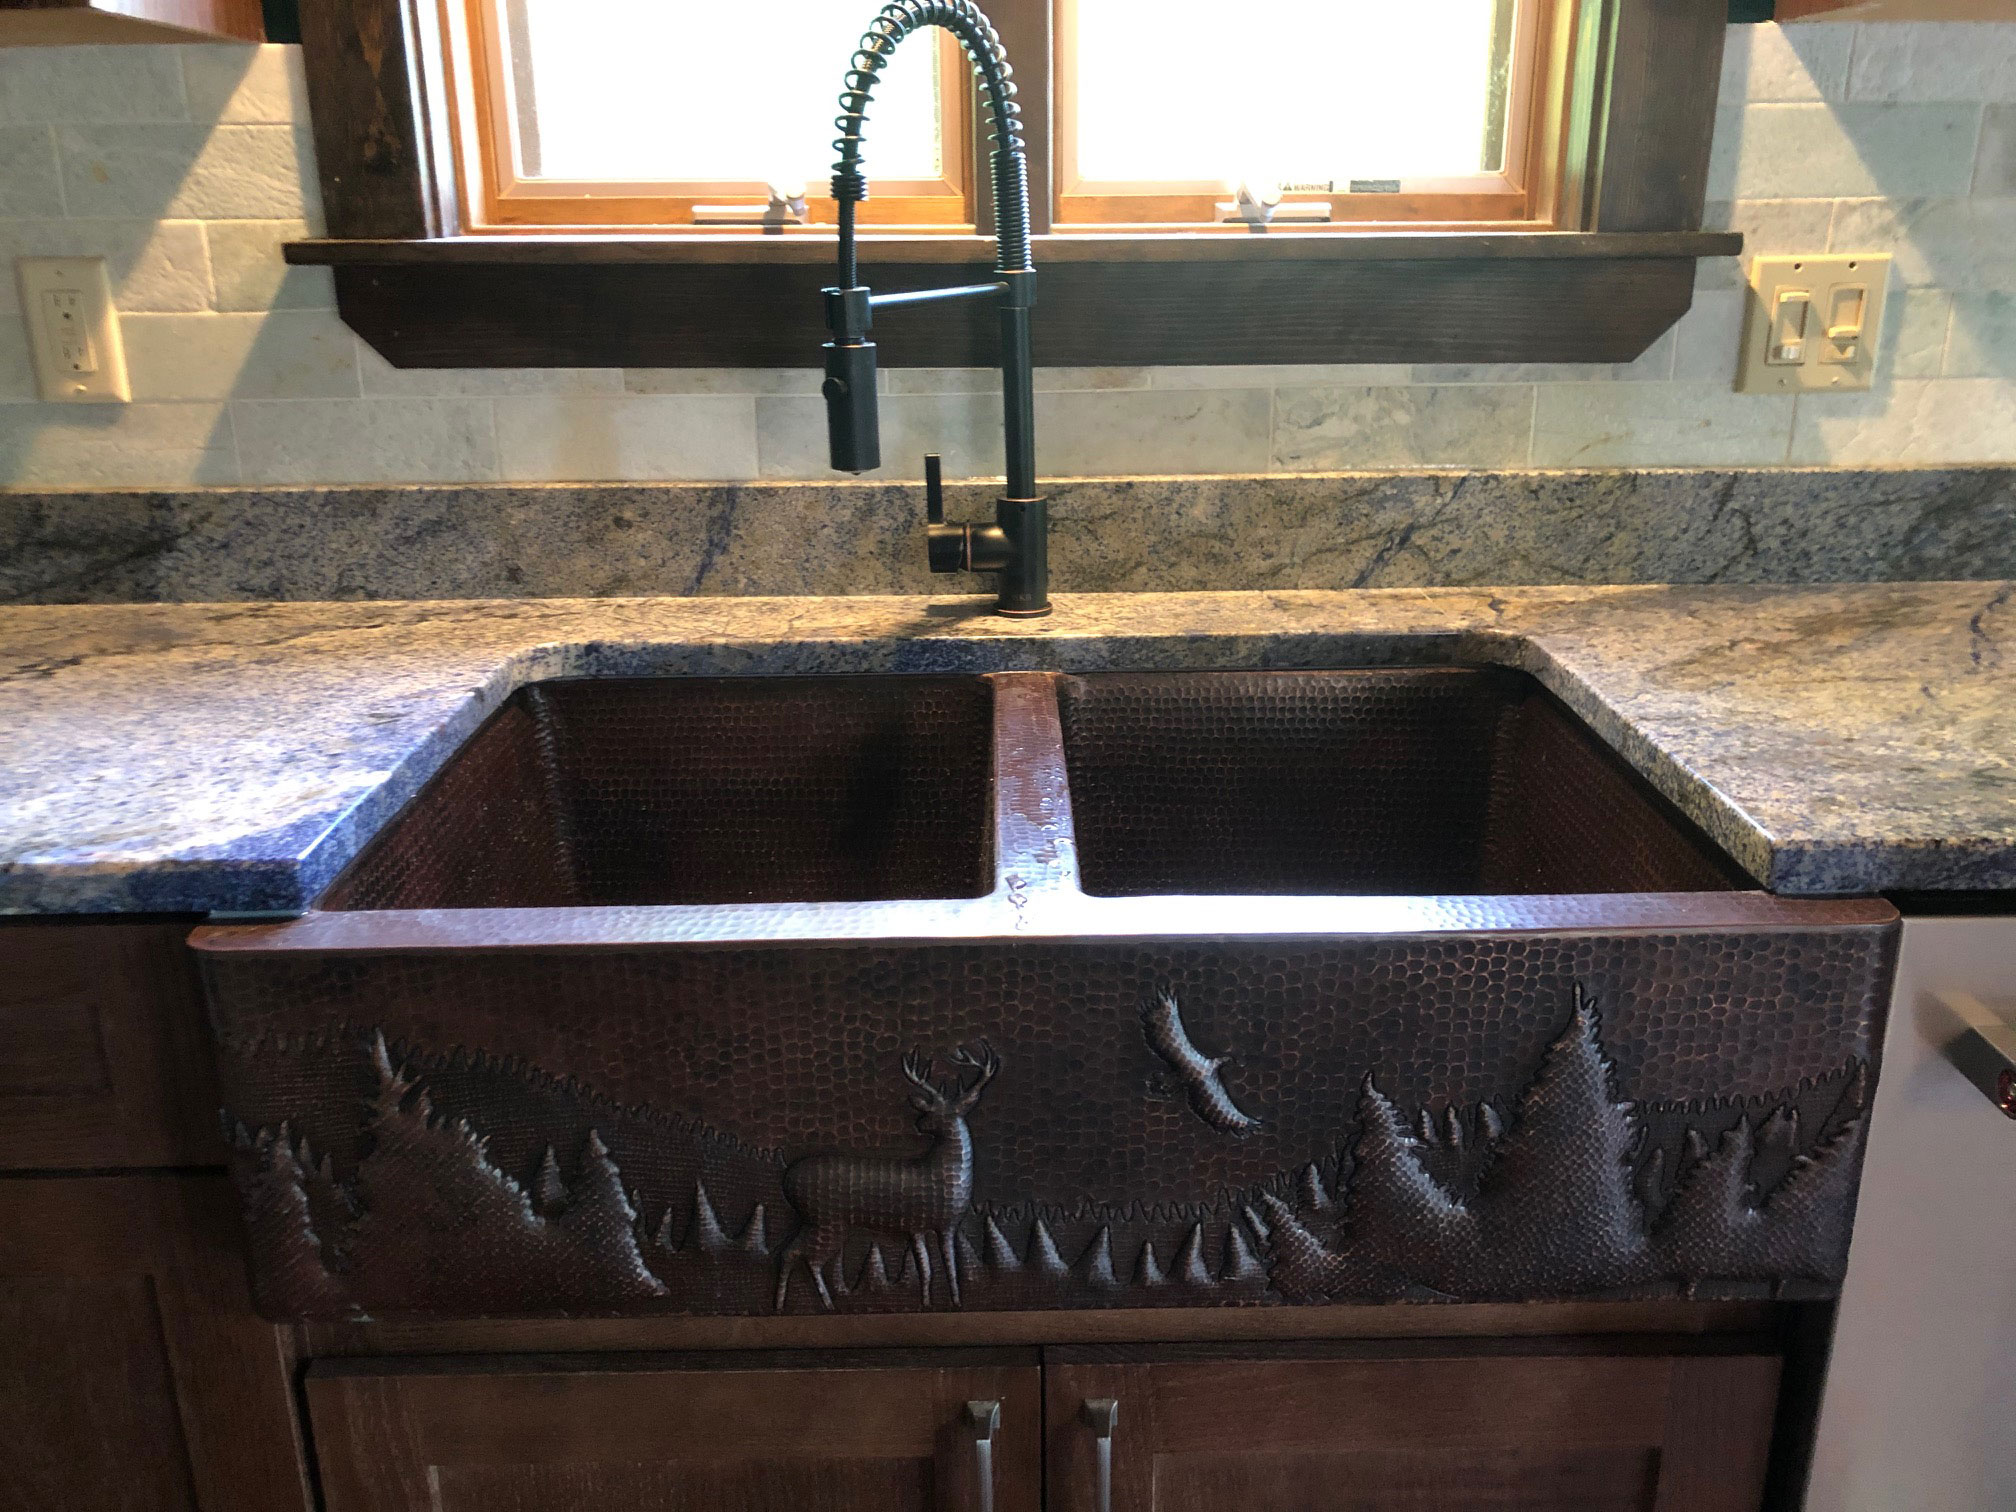 Kitchen design idea with beautiful sink idea, brown kitchen cabinets, marble kitchen countertops and brick backsplash